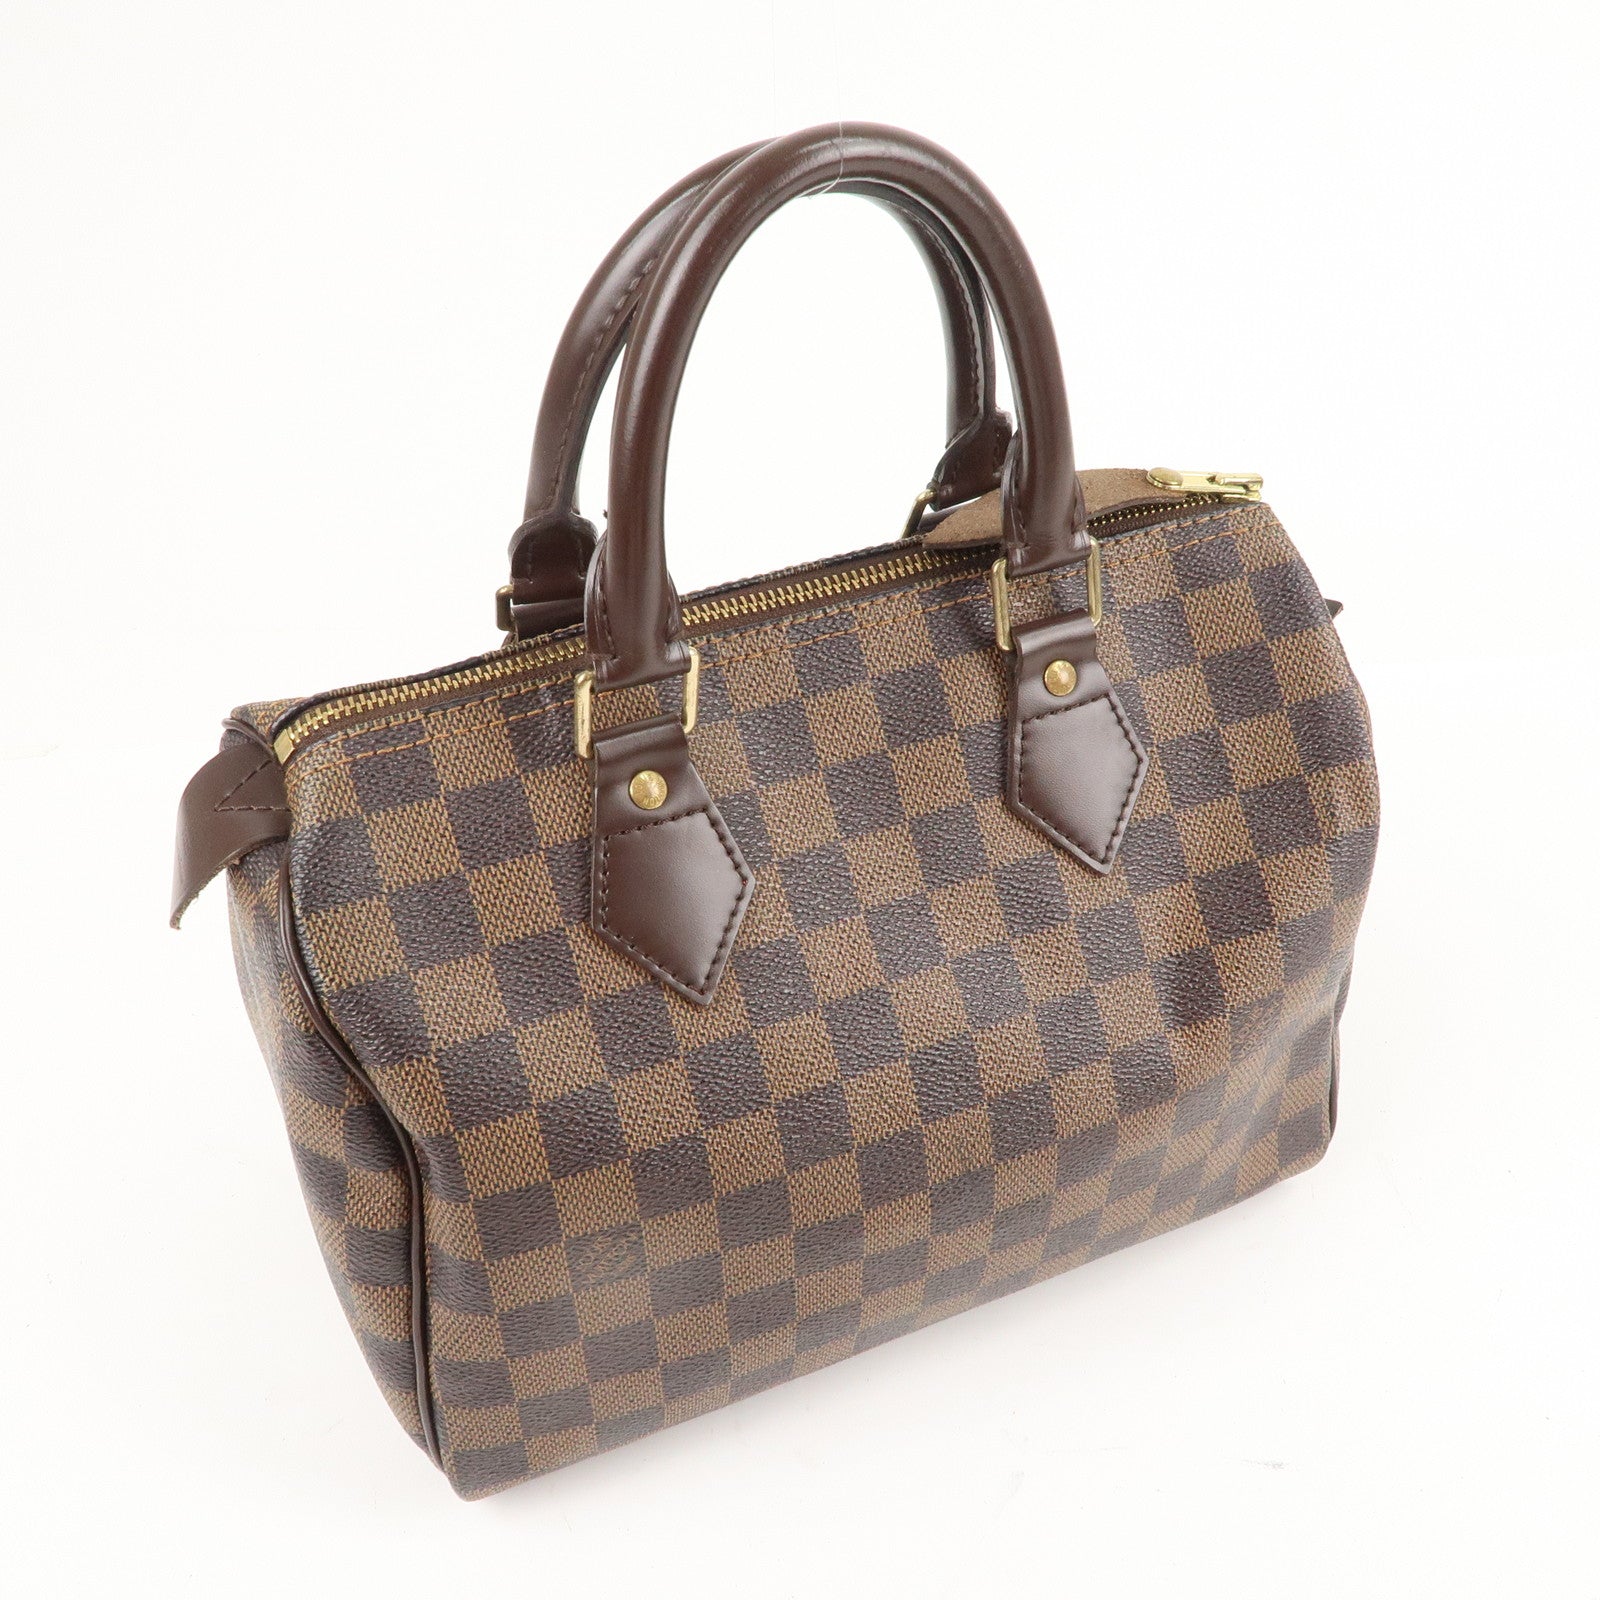 Brown Louis Vuitton Damier Ebene Speedy Bandouliere 35 Boston Bag